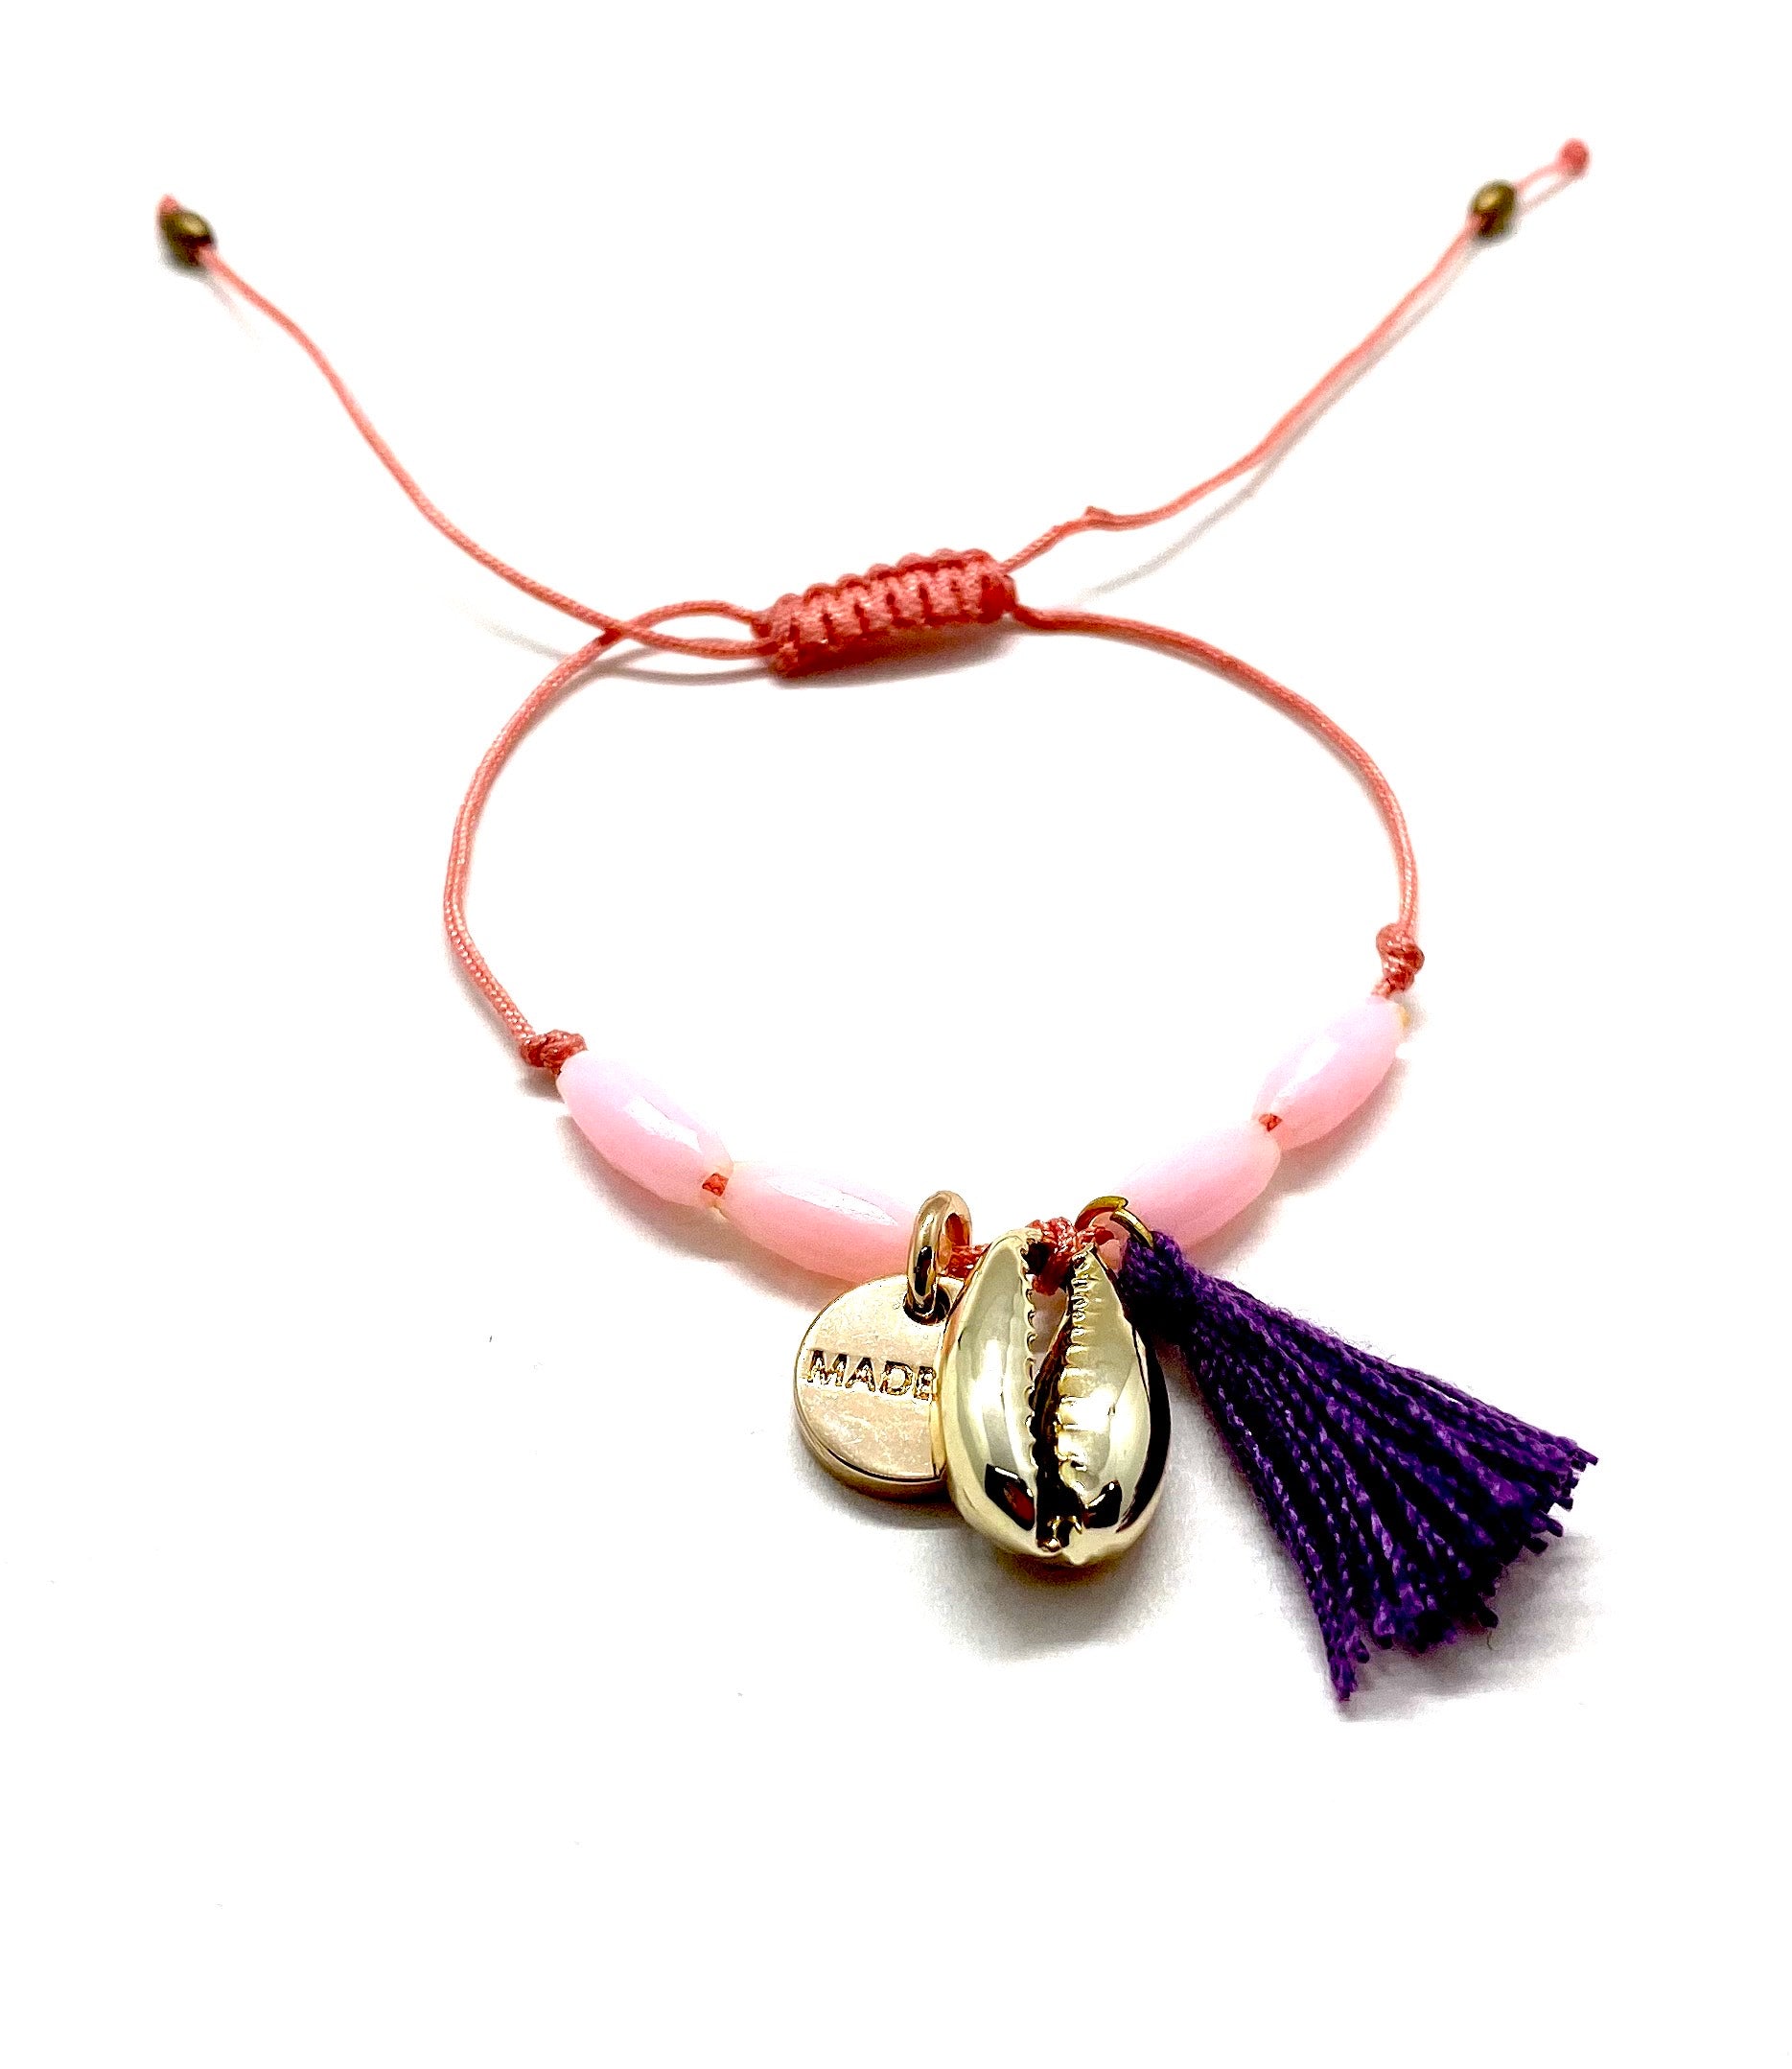 Gold shell pendant, salmon cord bracelet